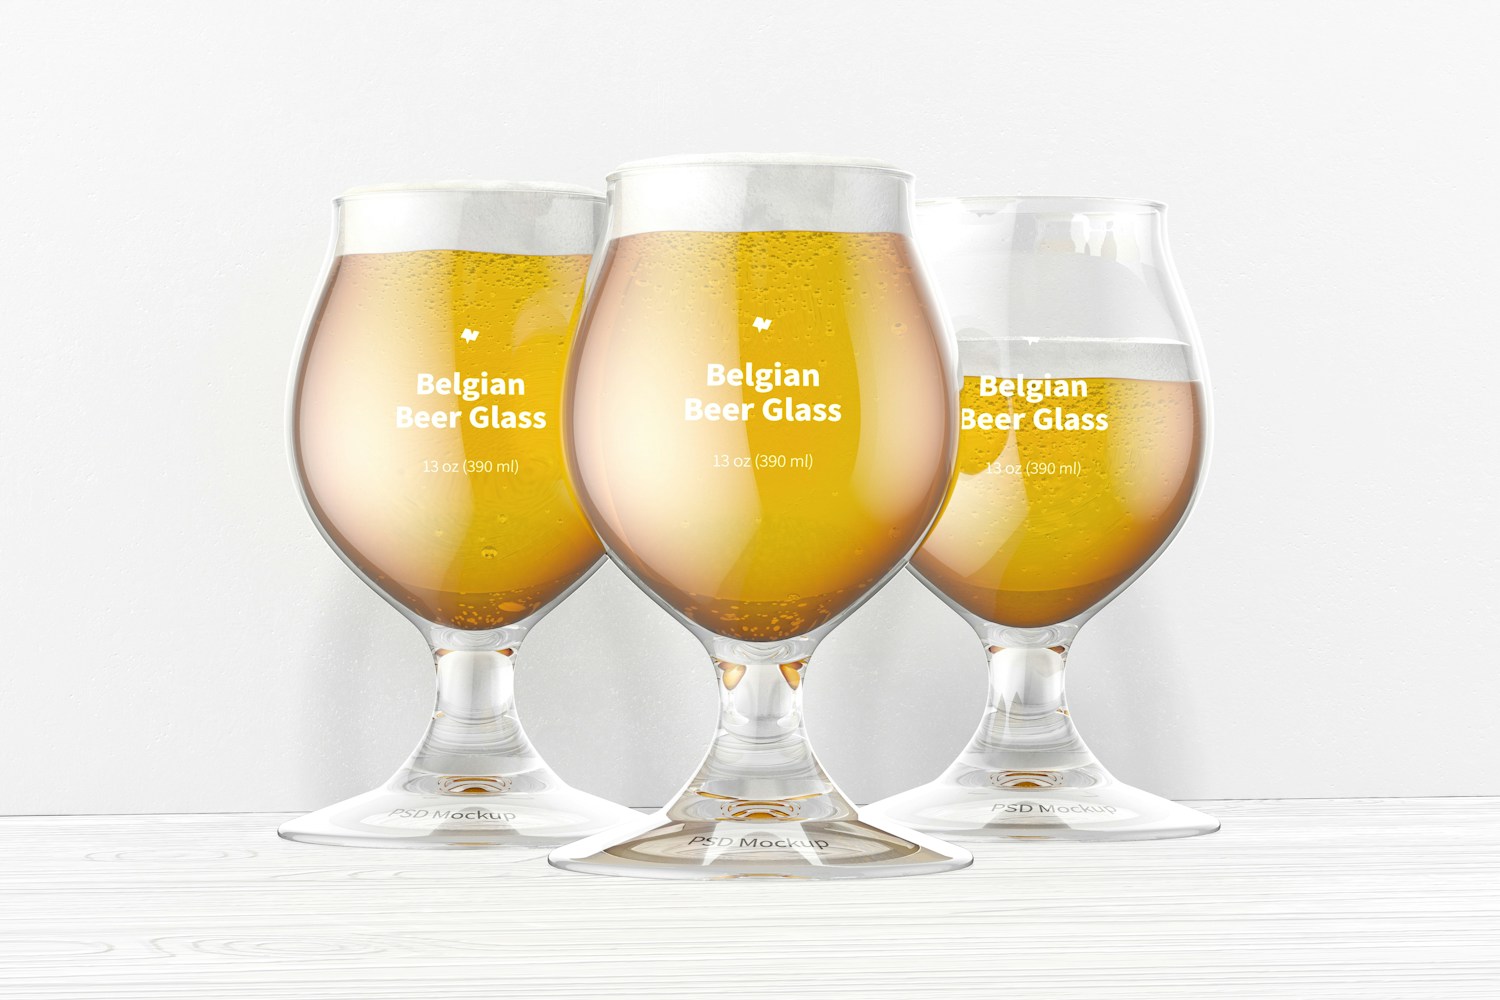 13 oz Belgian Beer Glasses Mockup, Front View